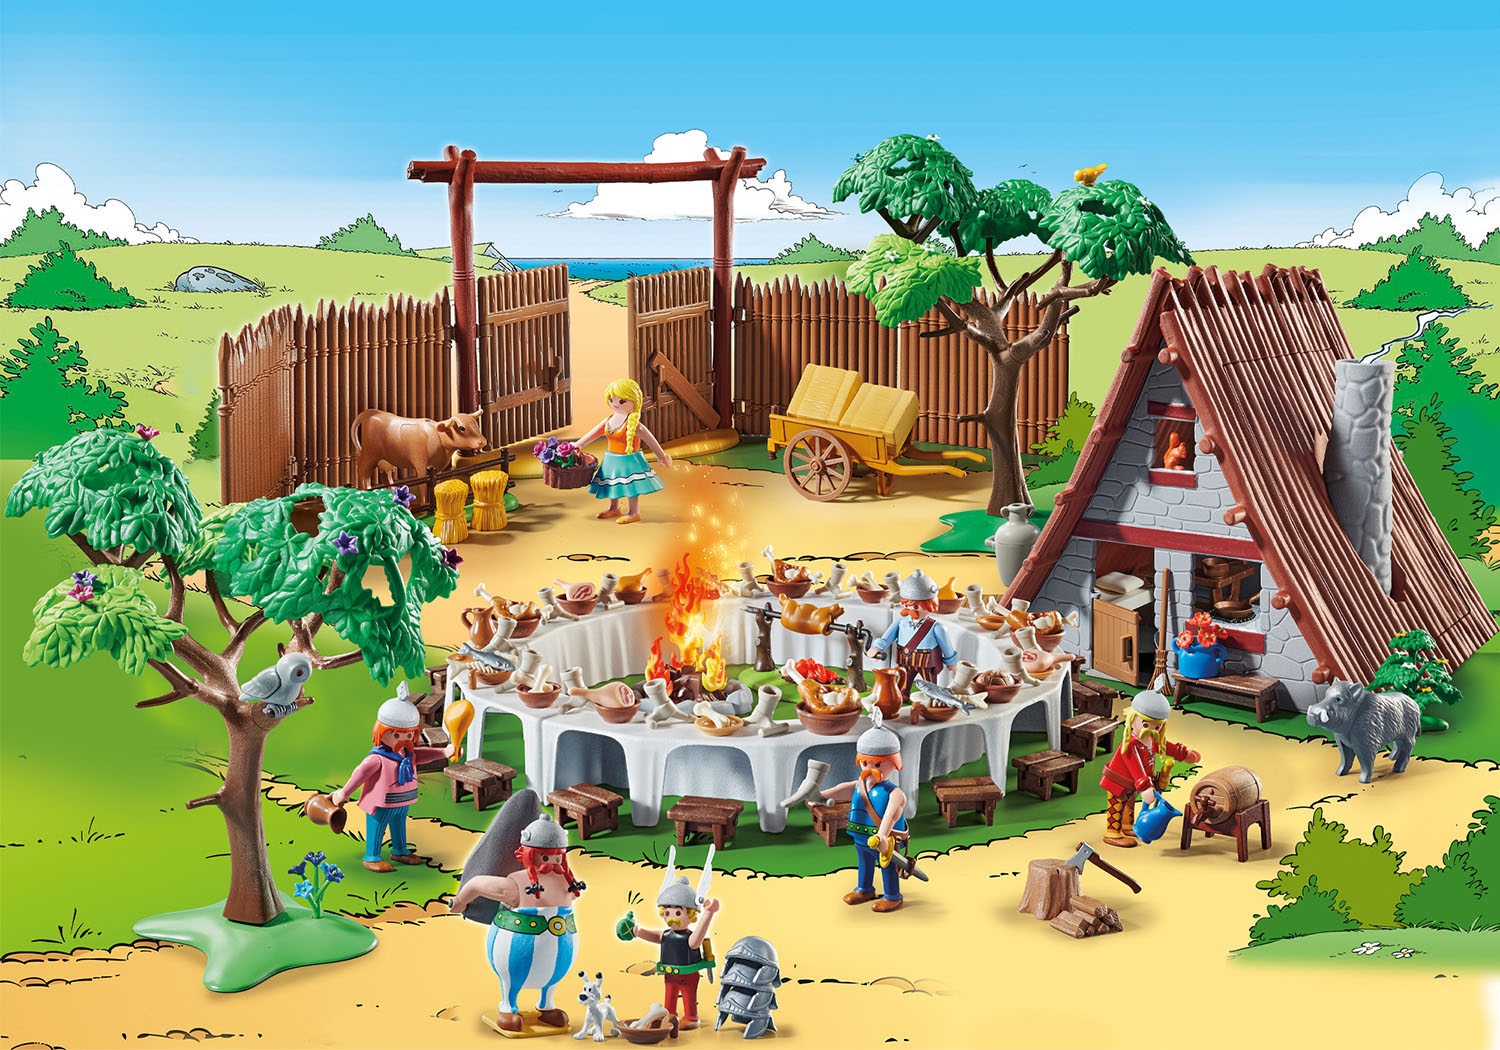 Playmobil® Konstruktions-Spielset »Grosses Dorffest (70931), Asterix«, (310 St.), Made in Germany